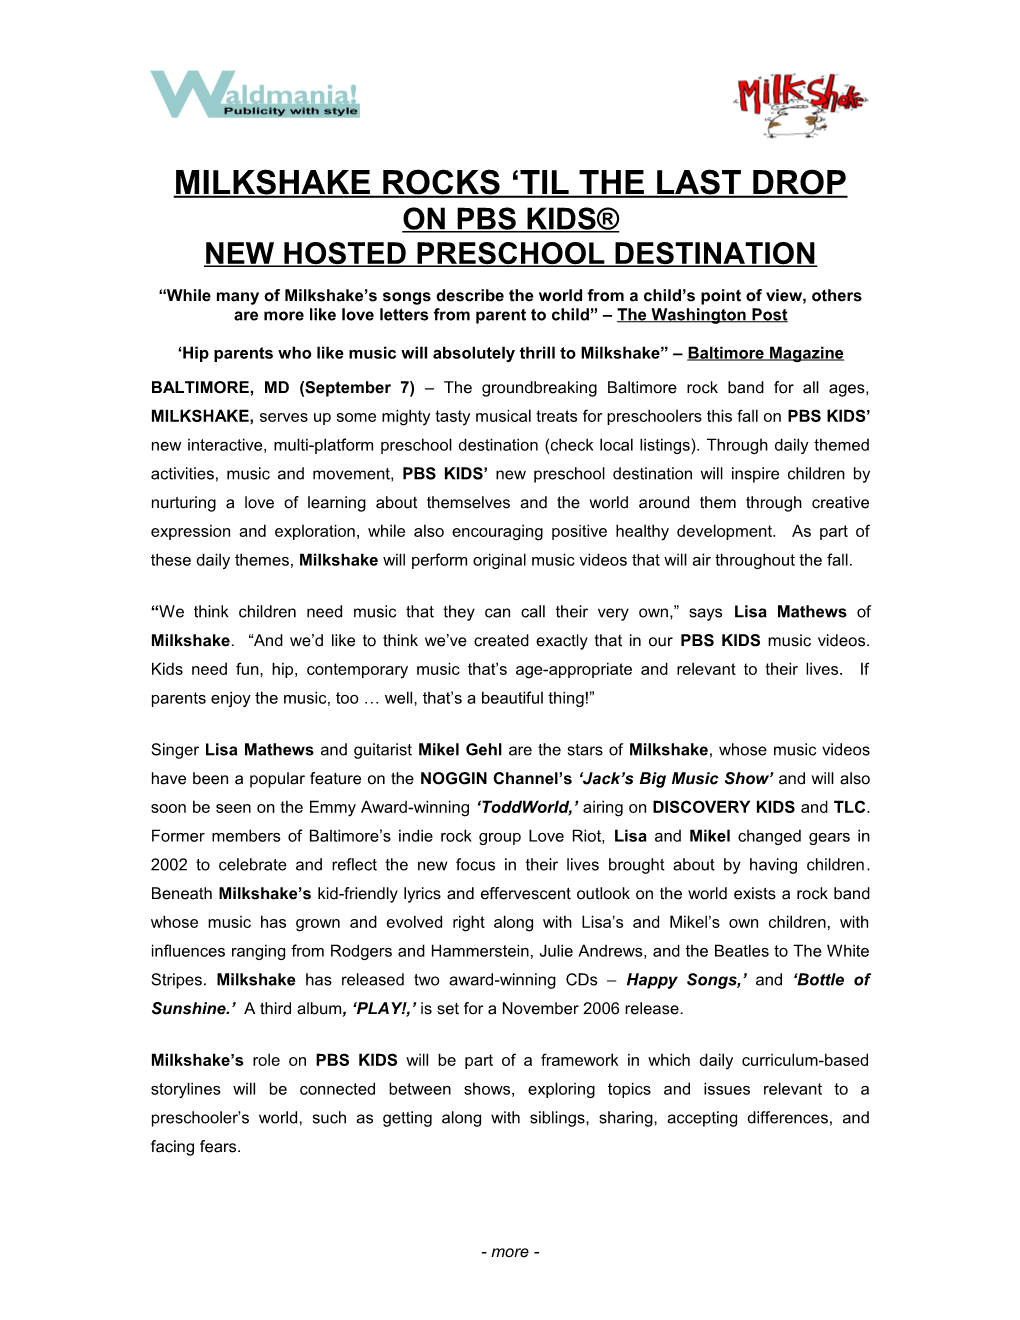 Milkshake Rocks Til the Last Drop